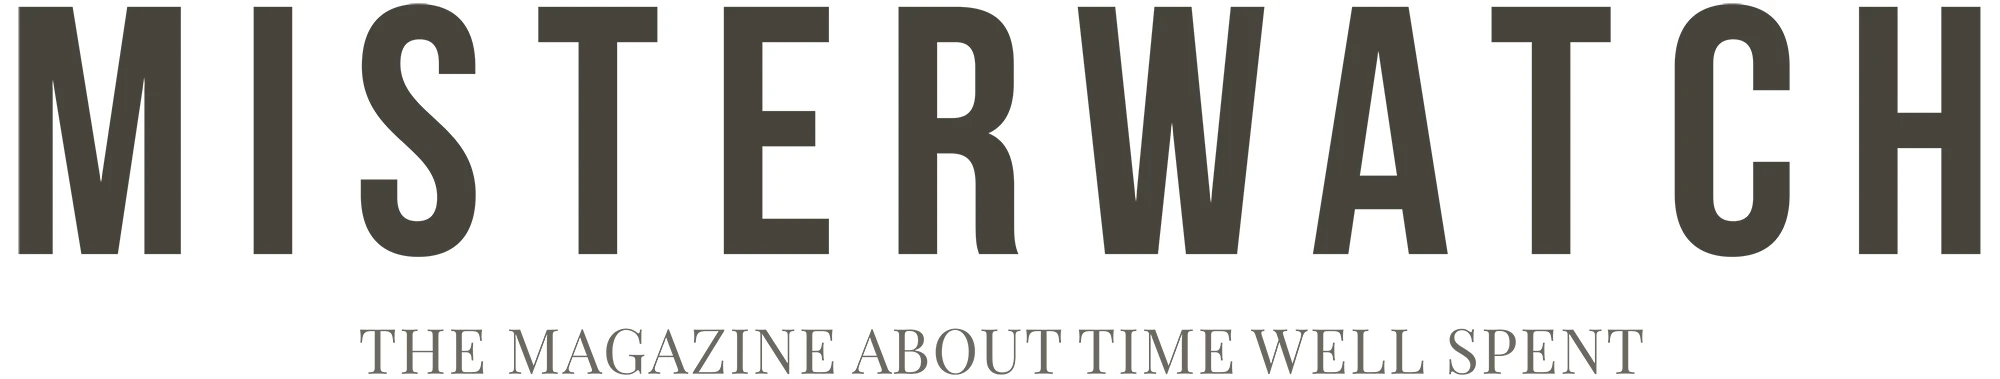 MISTERWATCH logo